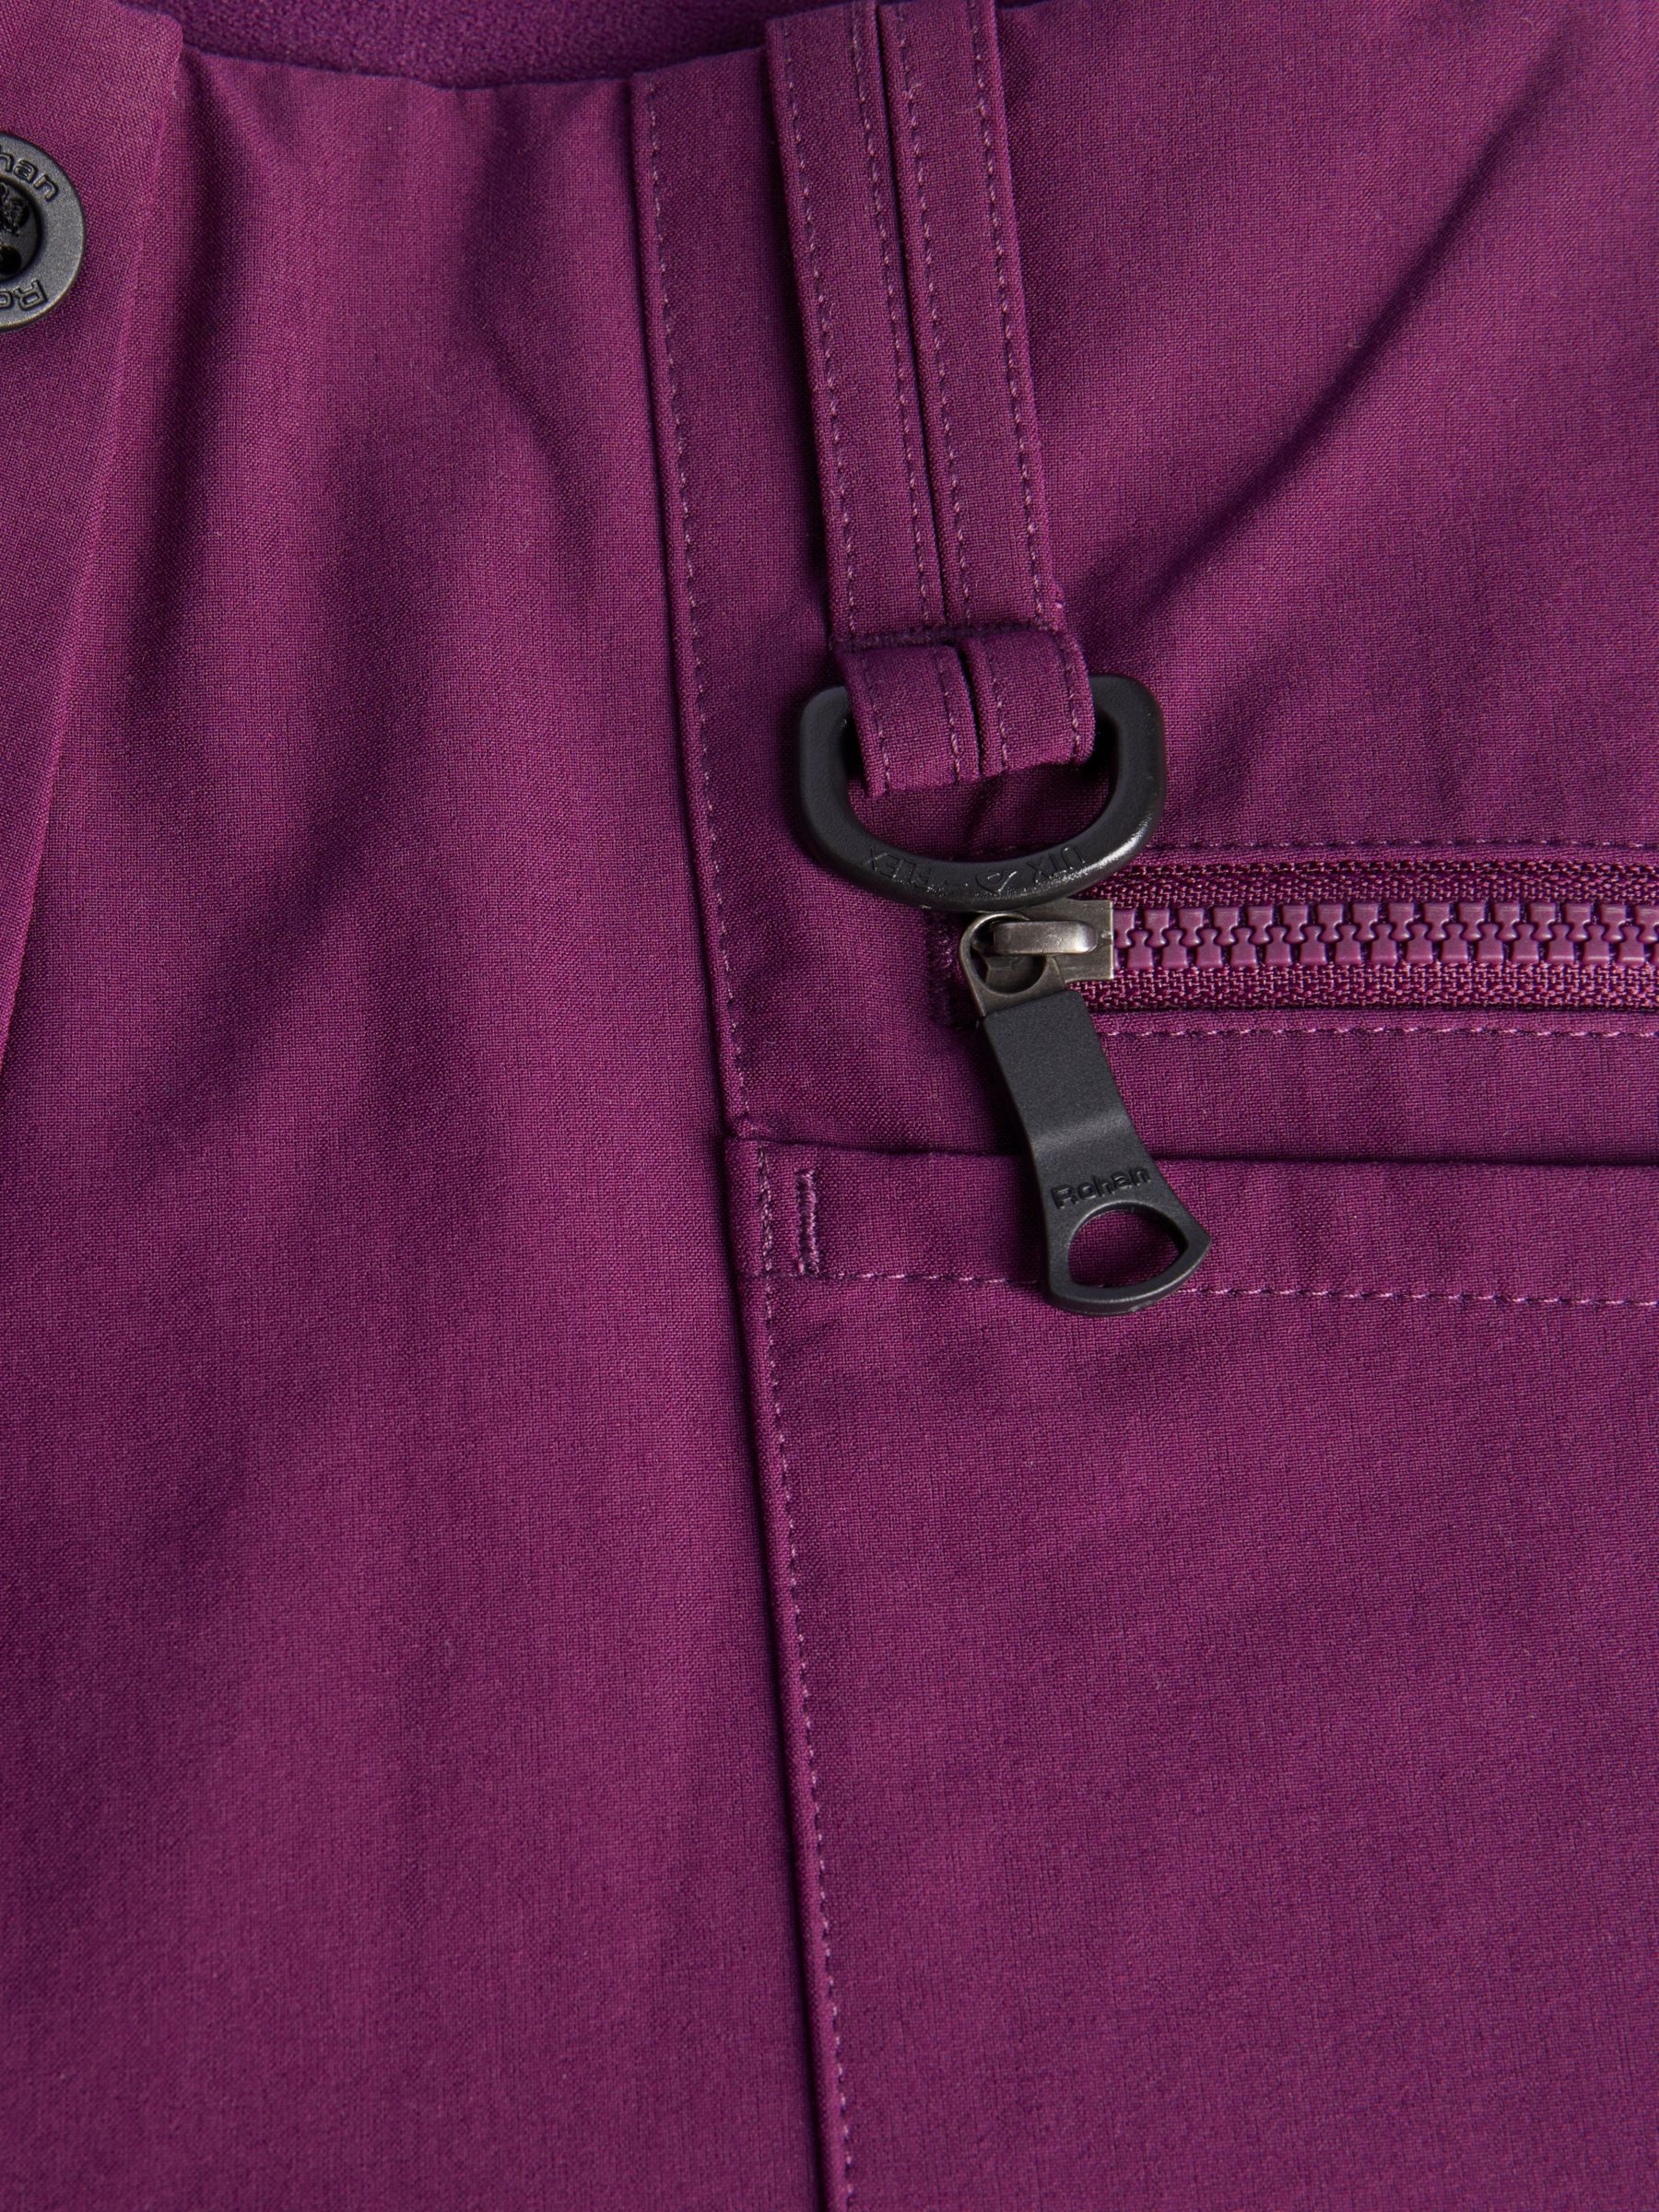 HAGLOFS Women's Mid Trail pink velvet hiking pants size 40